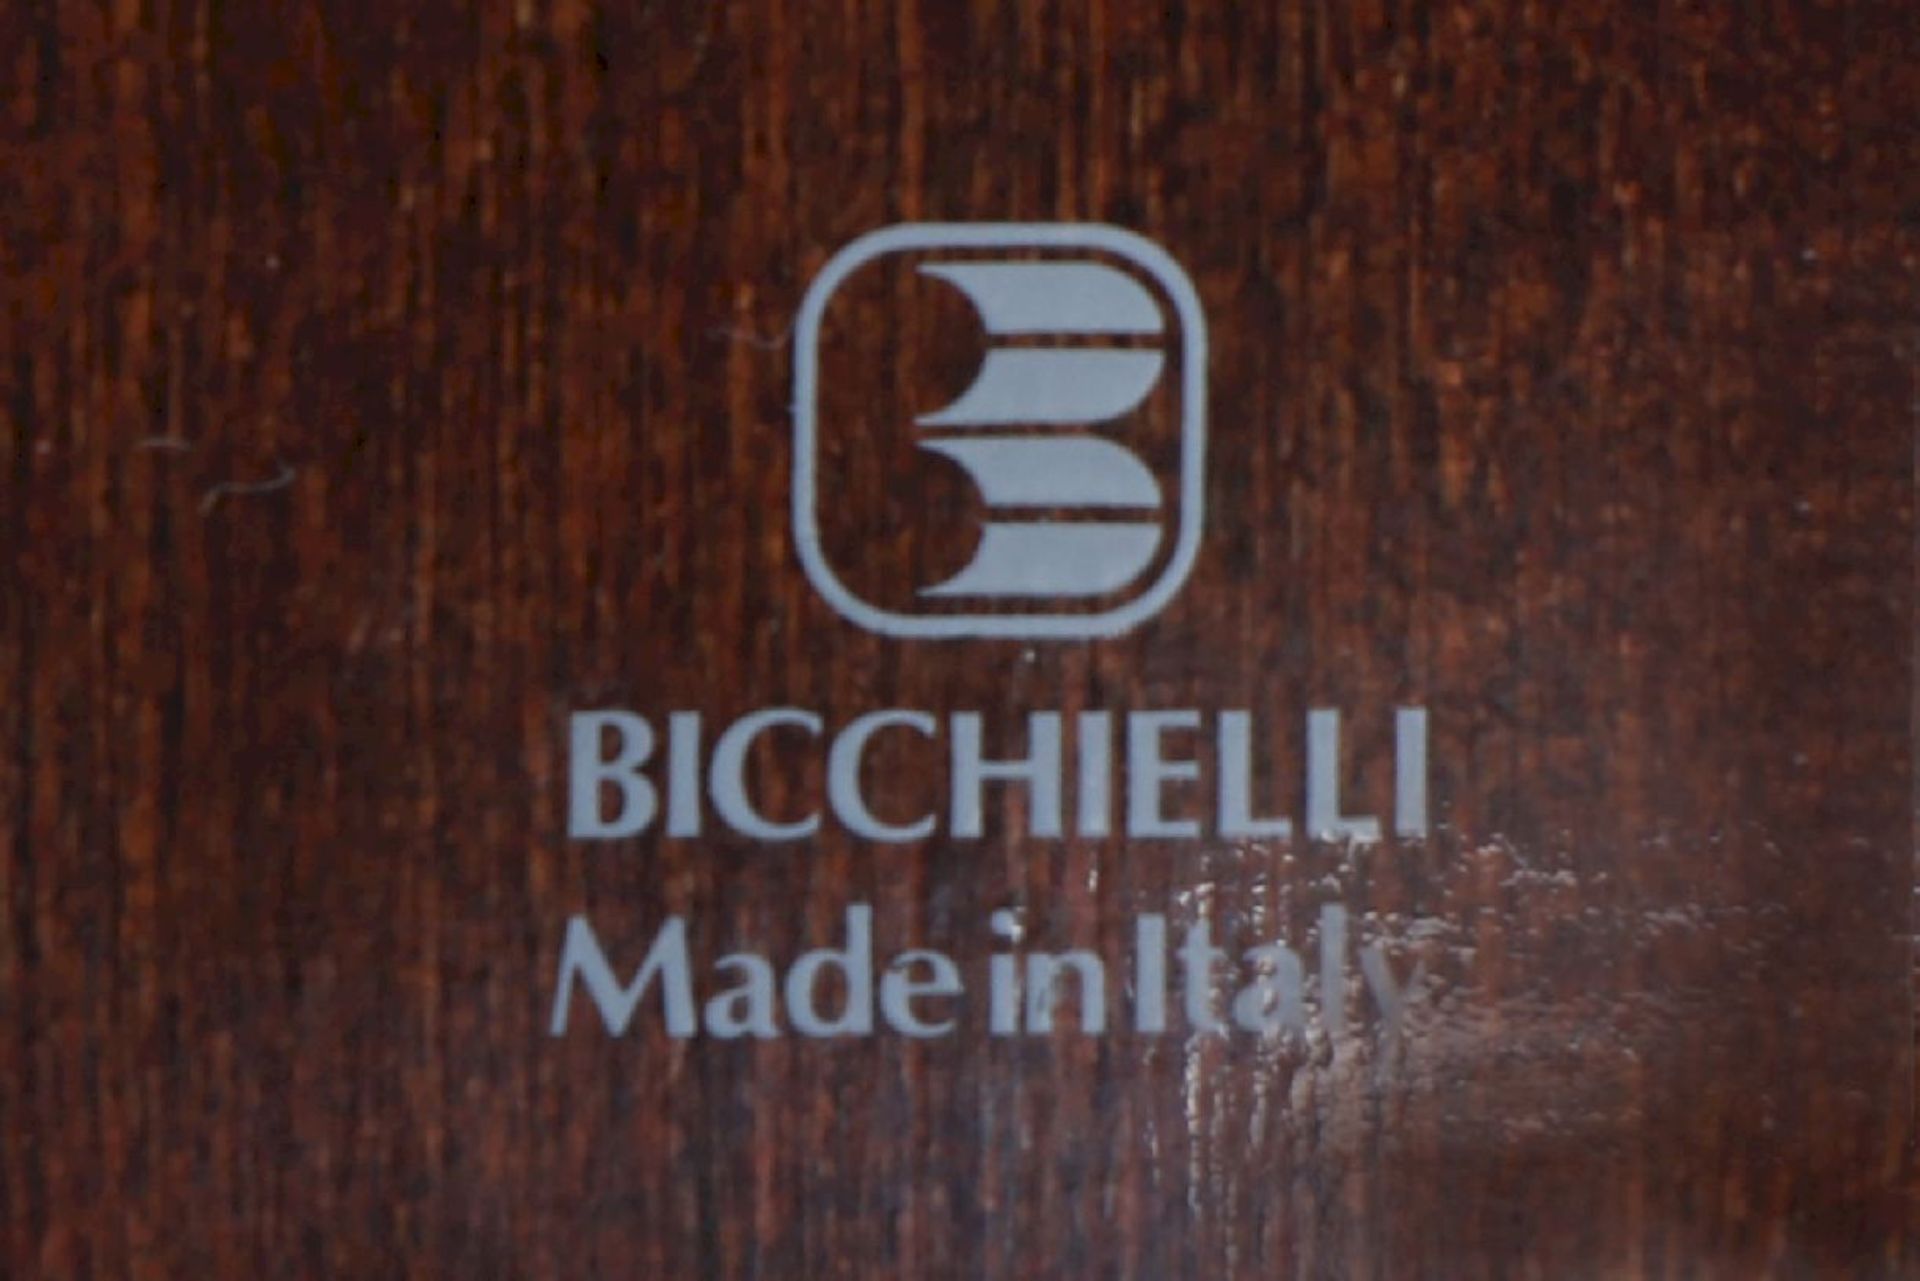 4 BICCHIELLI (Italia) Fotorahmen3x Silber, 1x versilbert, 1x 12x12cm, 2x 13x17cm, 1x 21x16cm - Image 4 of 4